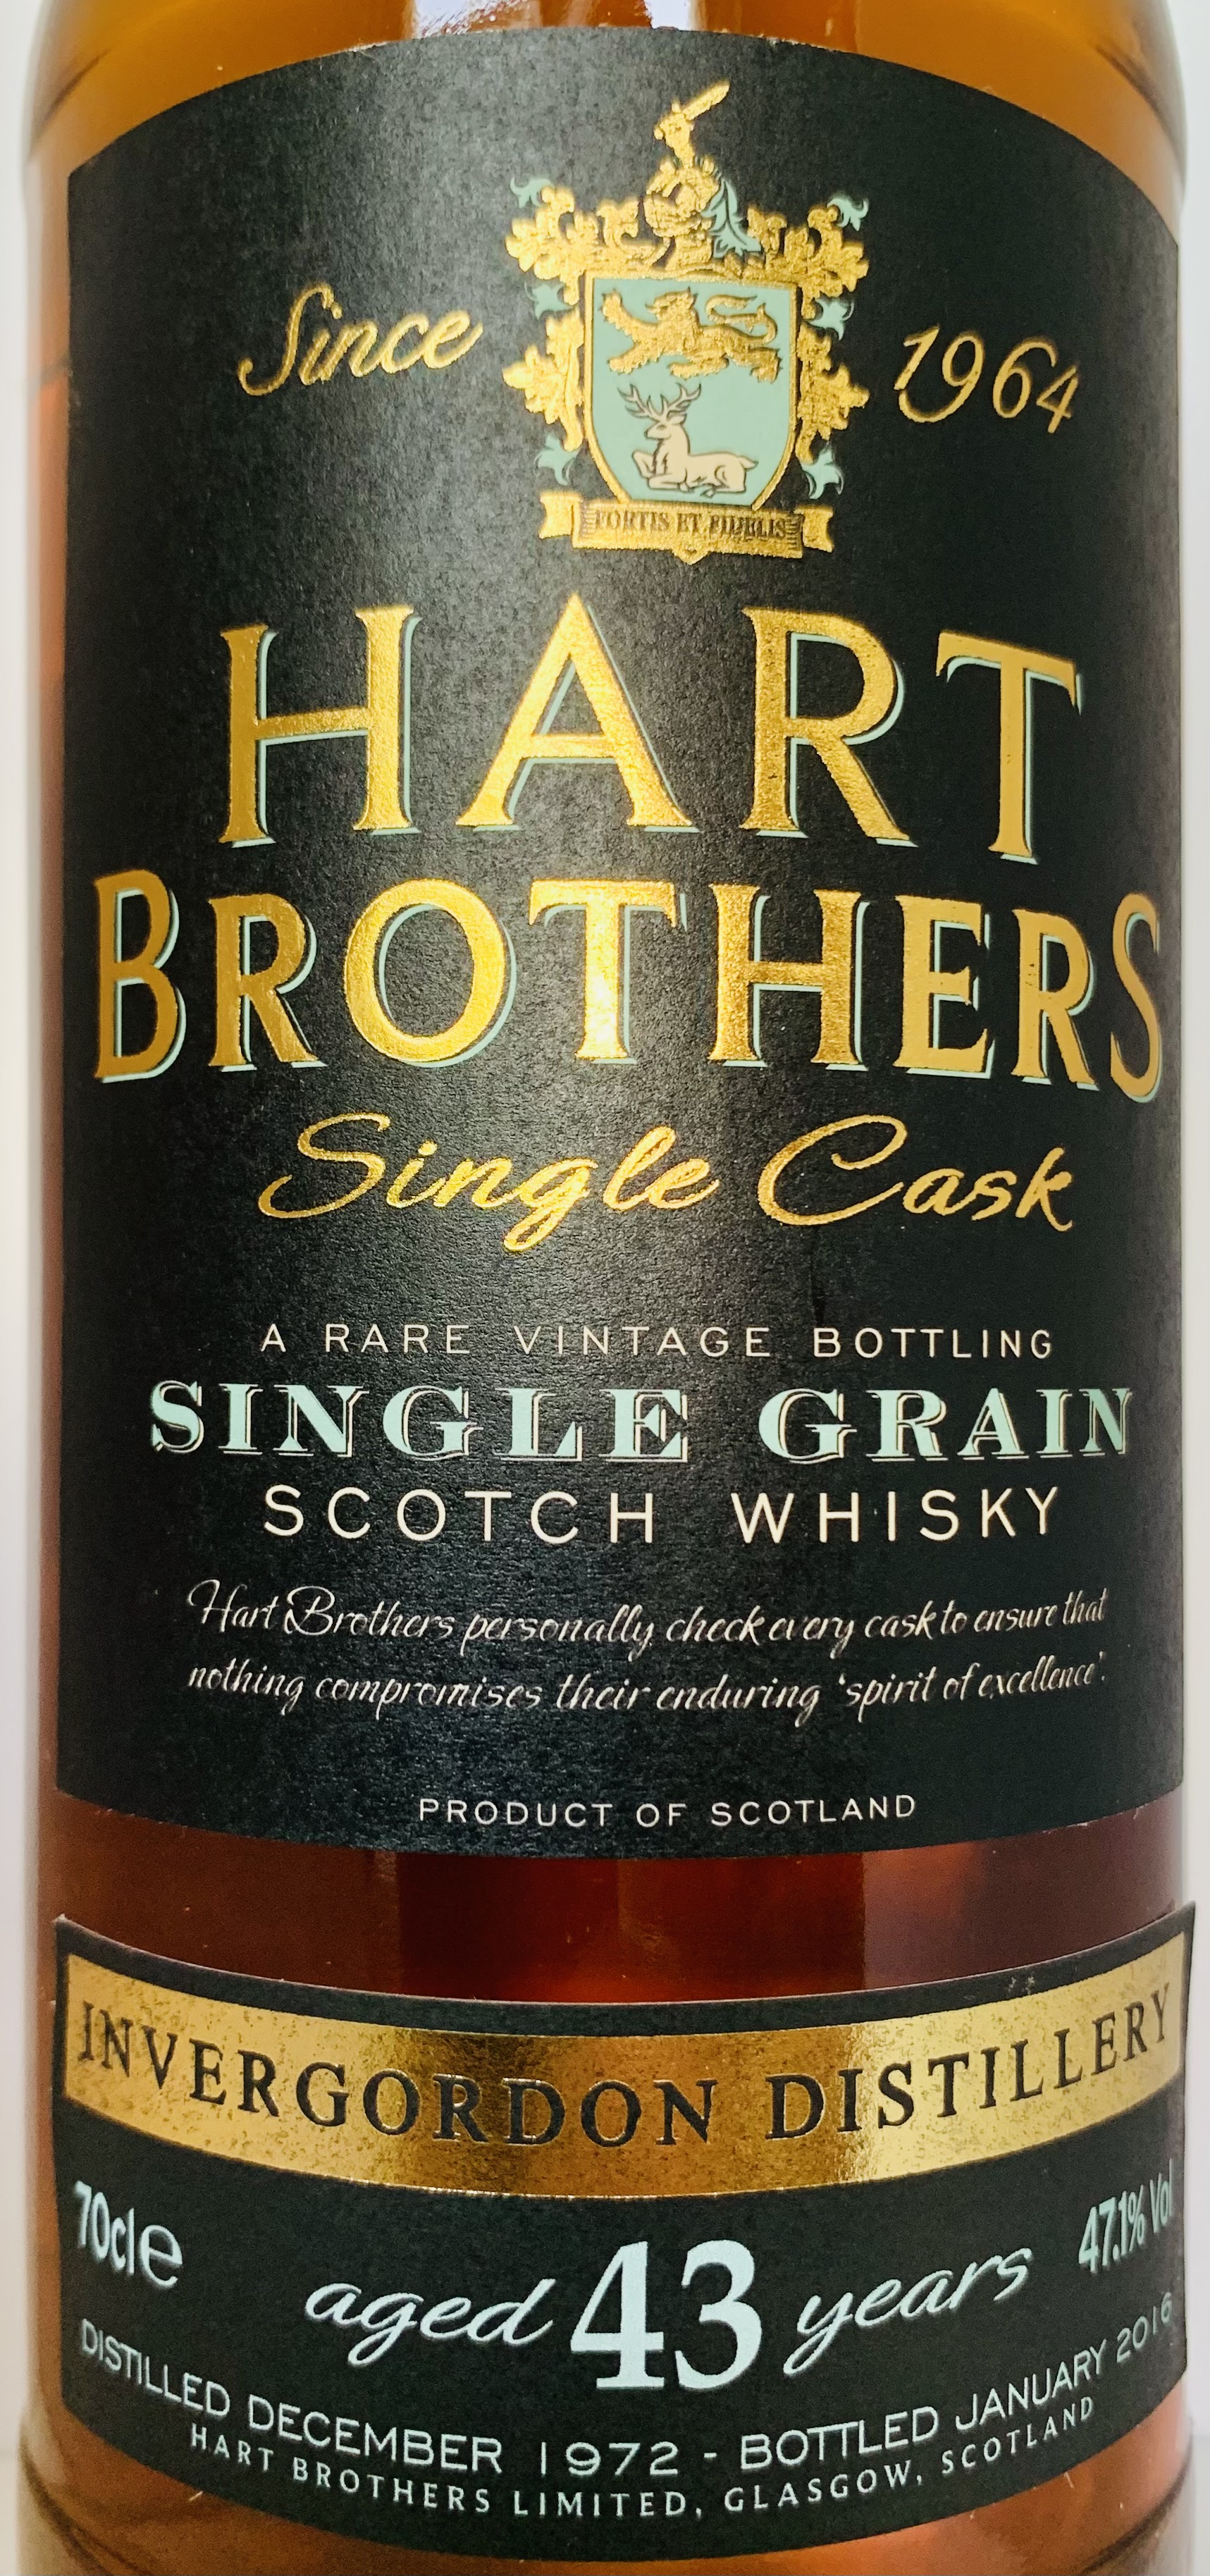 Invergordon 1972 - 43 Jahre Single Grain Whisky